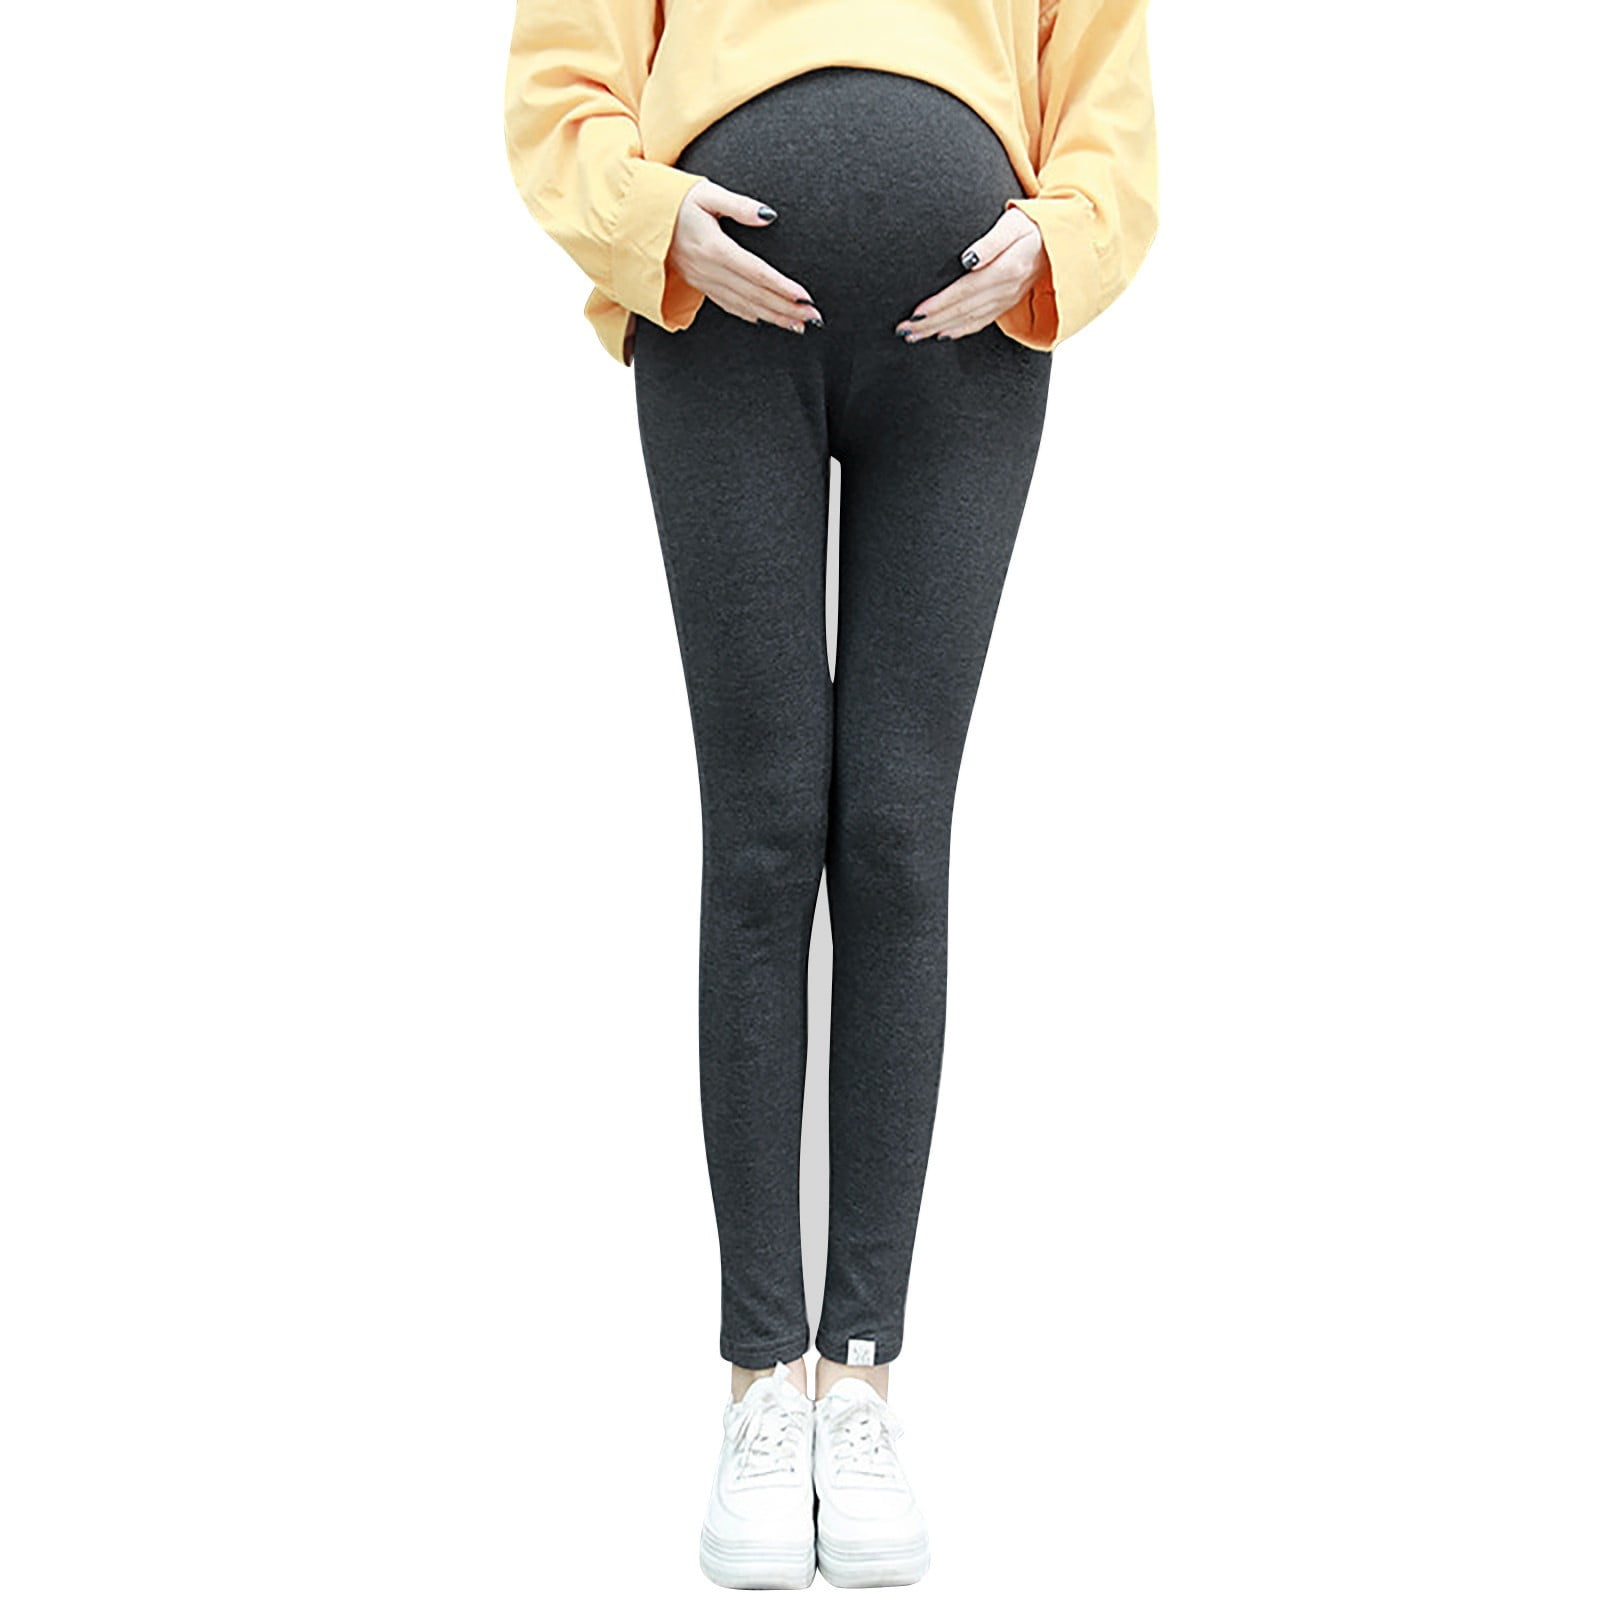 Hwmodou Women Legging Women'S Plus Size Maternity Wear Belly Pants ...